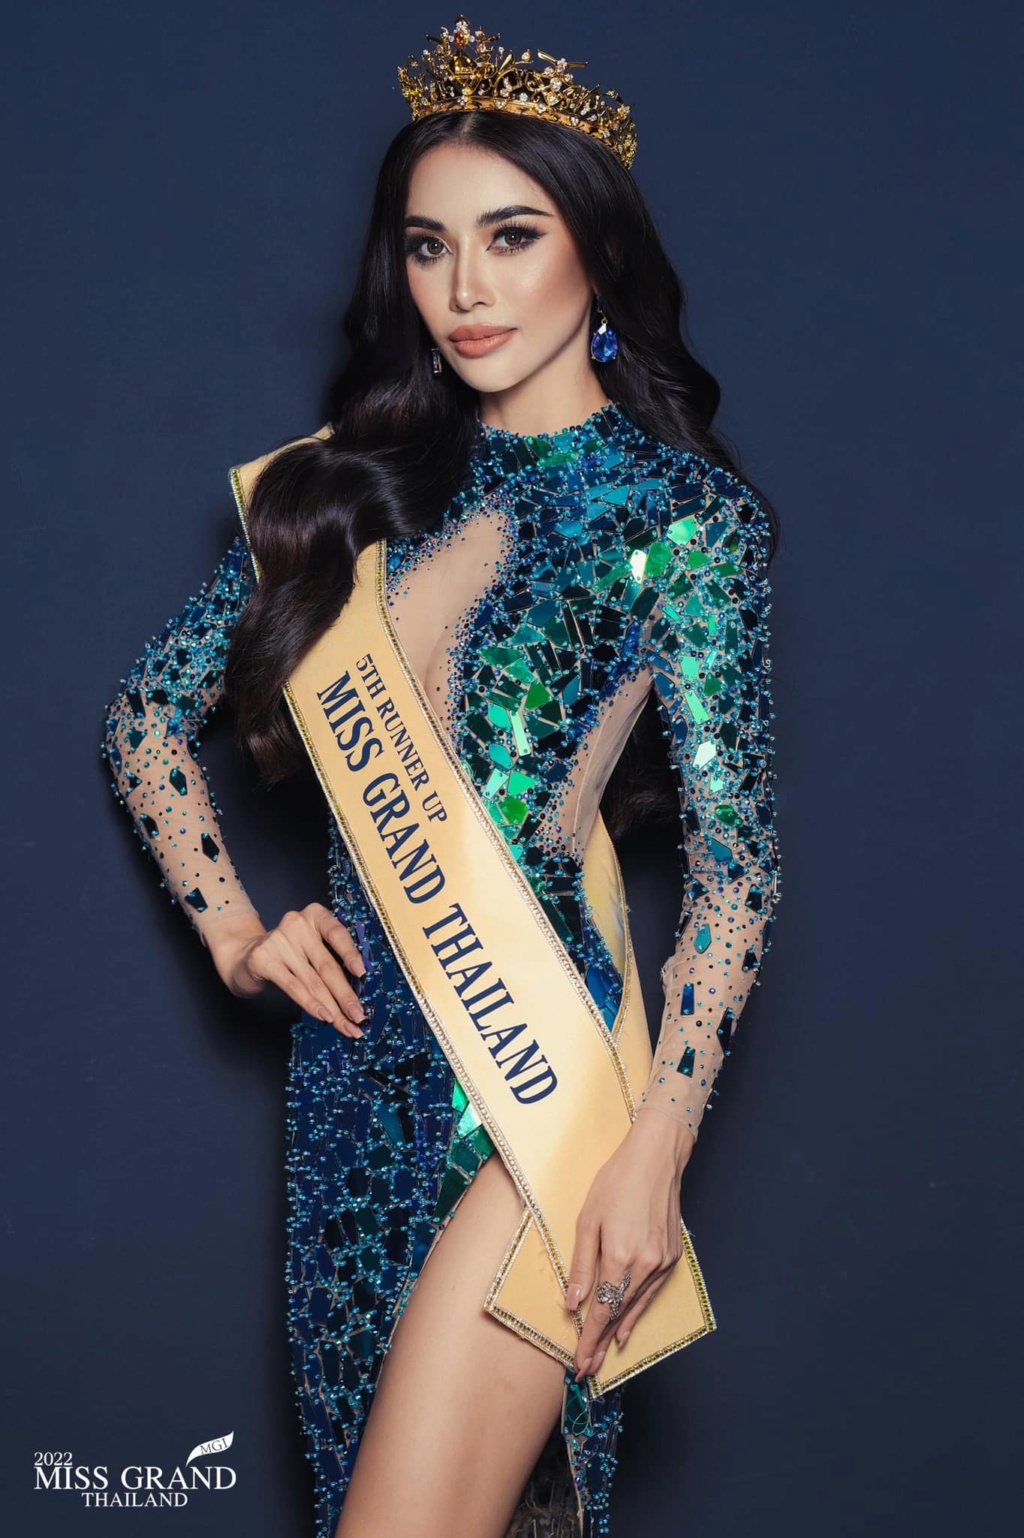 Miss Grand International Thailand 2022 is Bangkok 27929311